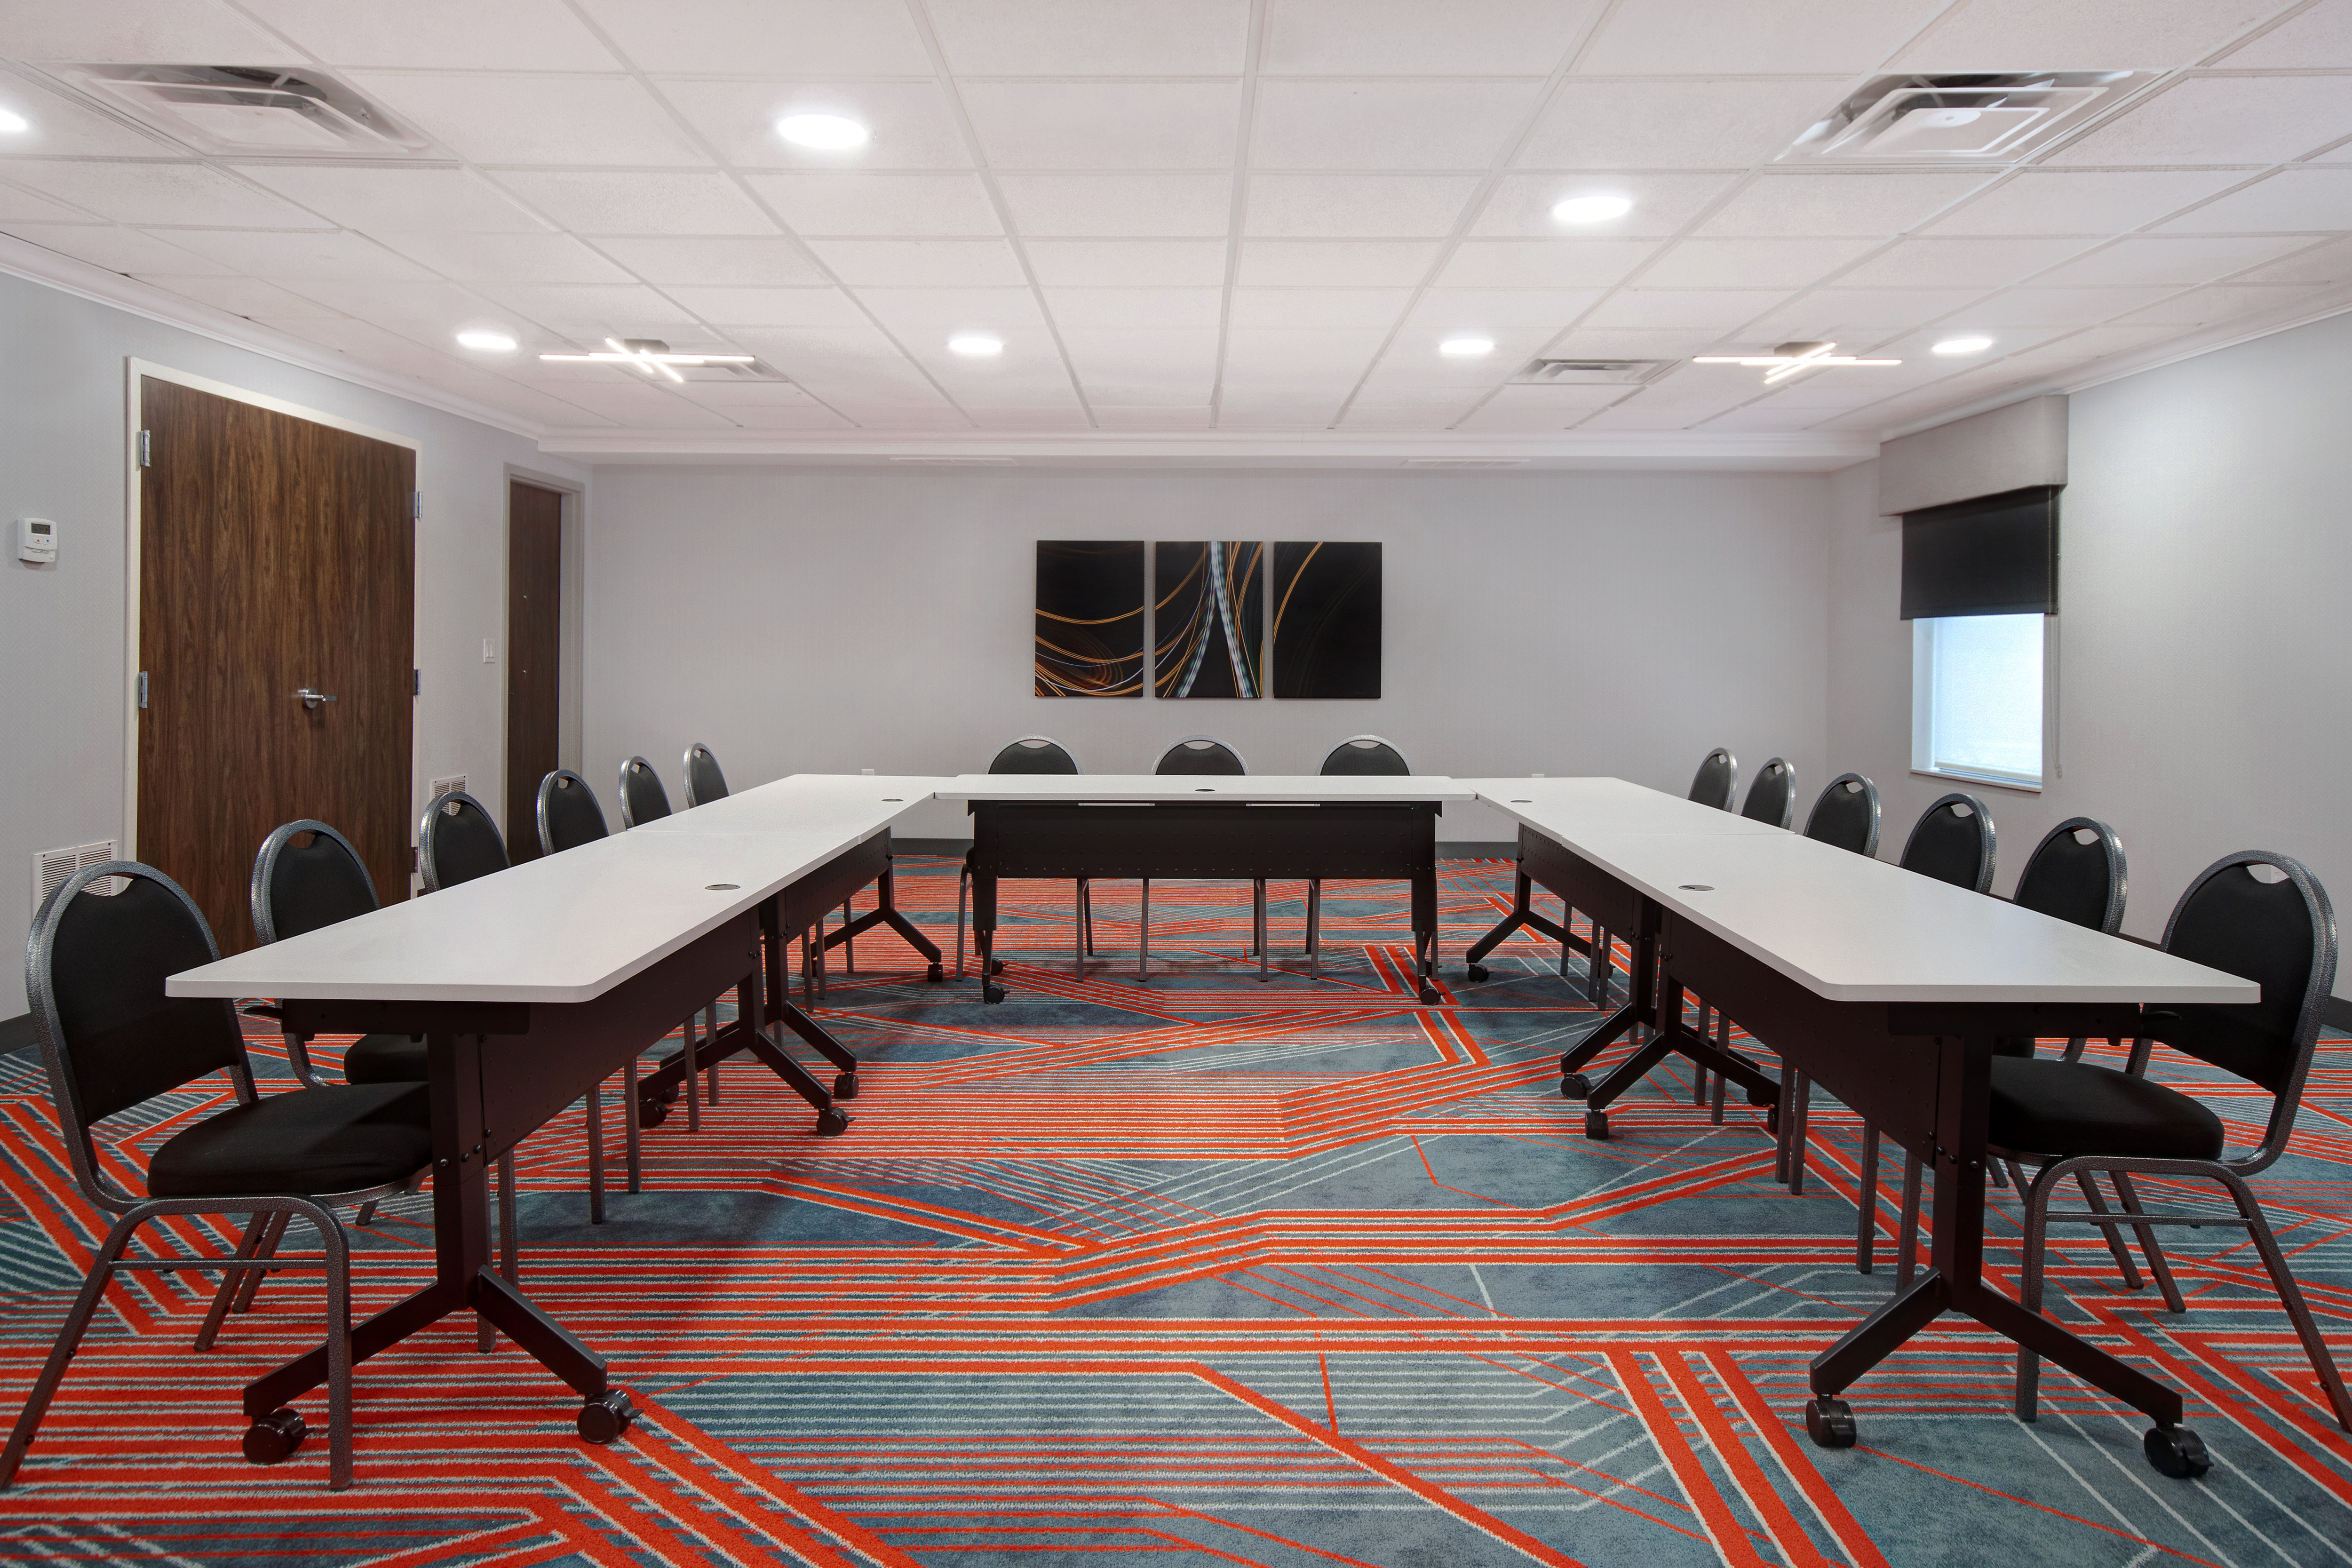 Meeting Room With U-Shape Design